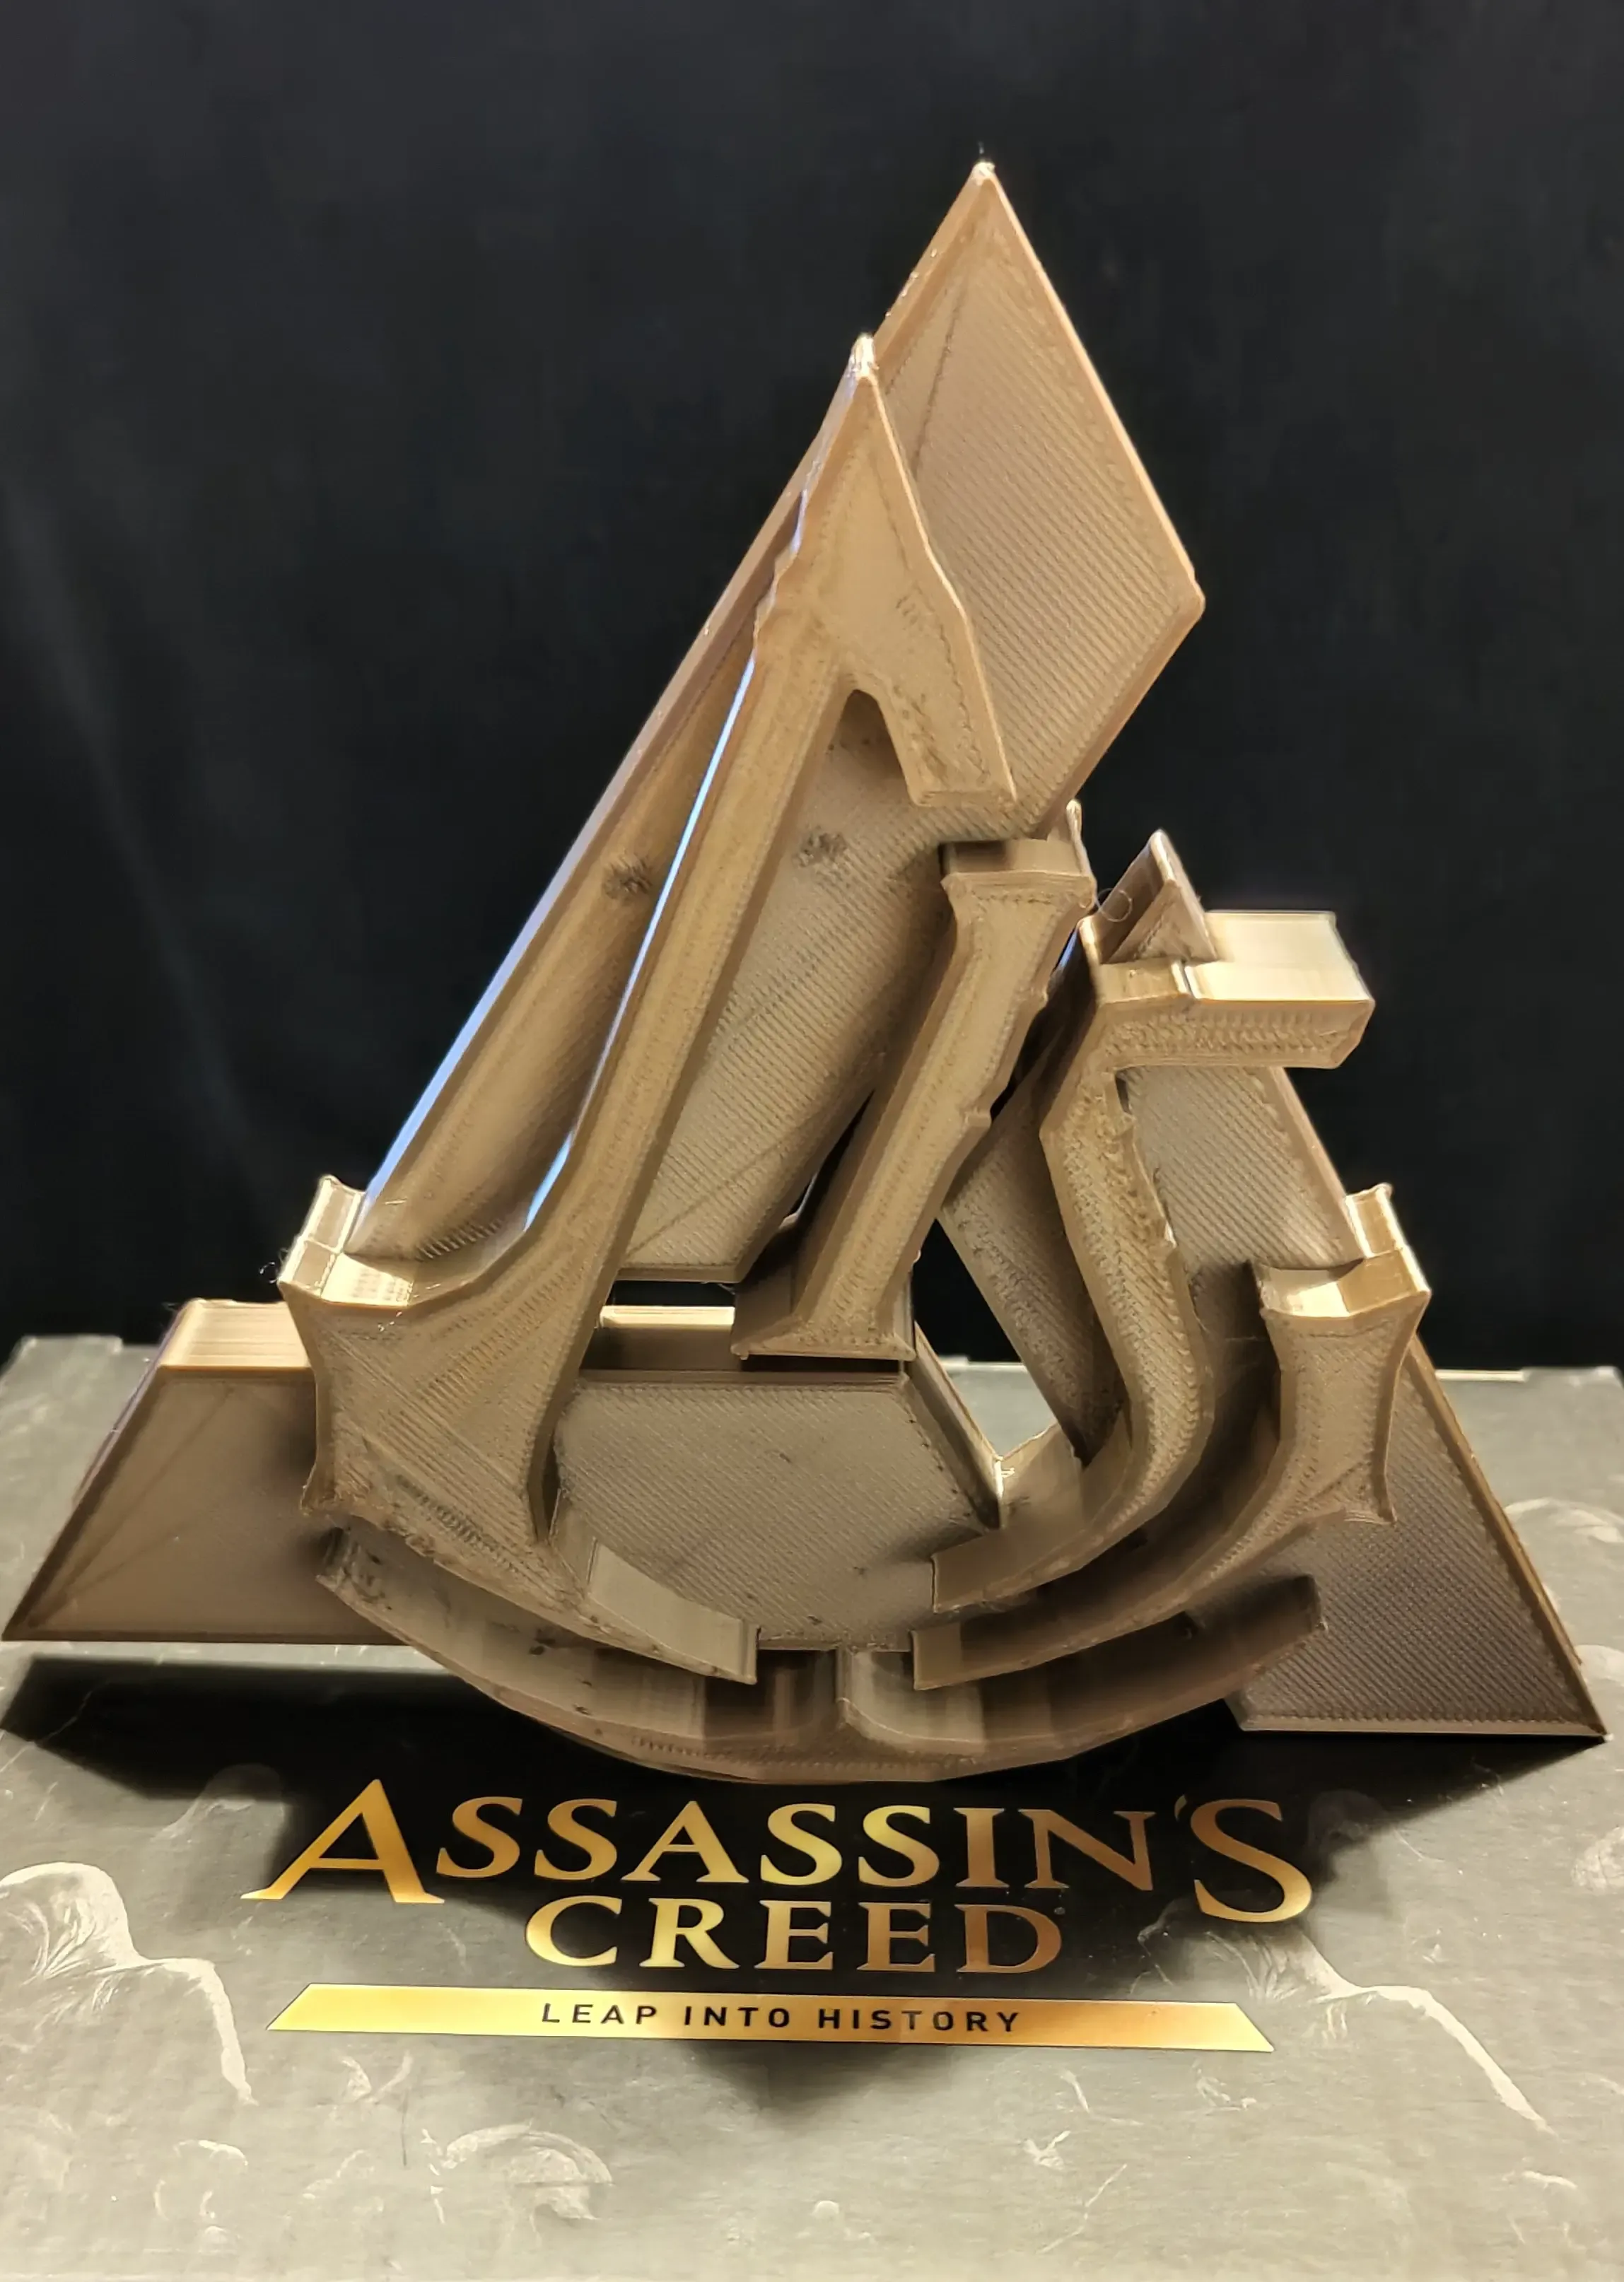 Assassin's creed 15 anniversary